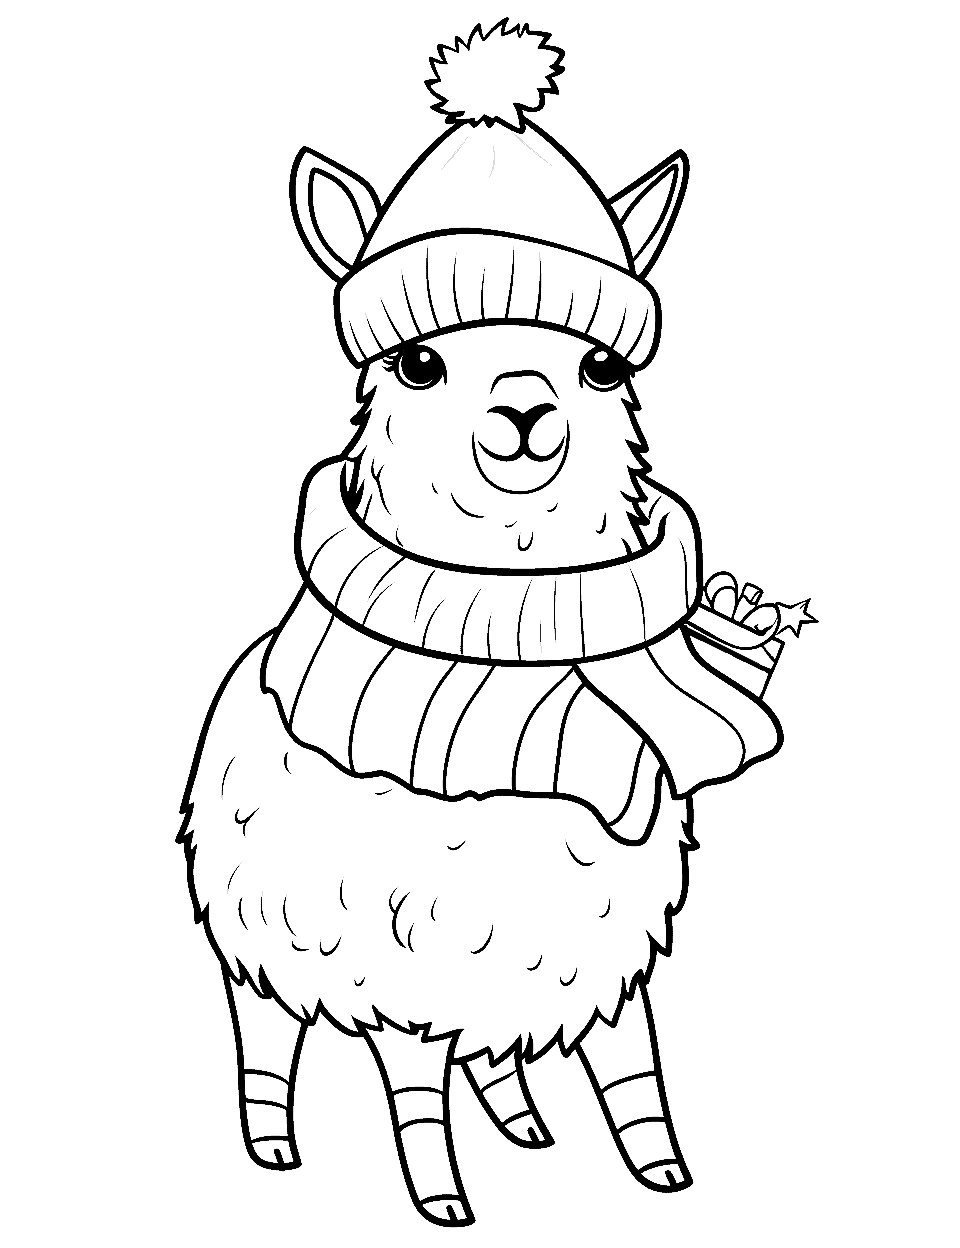 Christmas Llama Coloring Page - A cute llama wearing a Santa hat and a festive scarf.